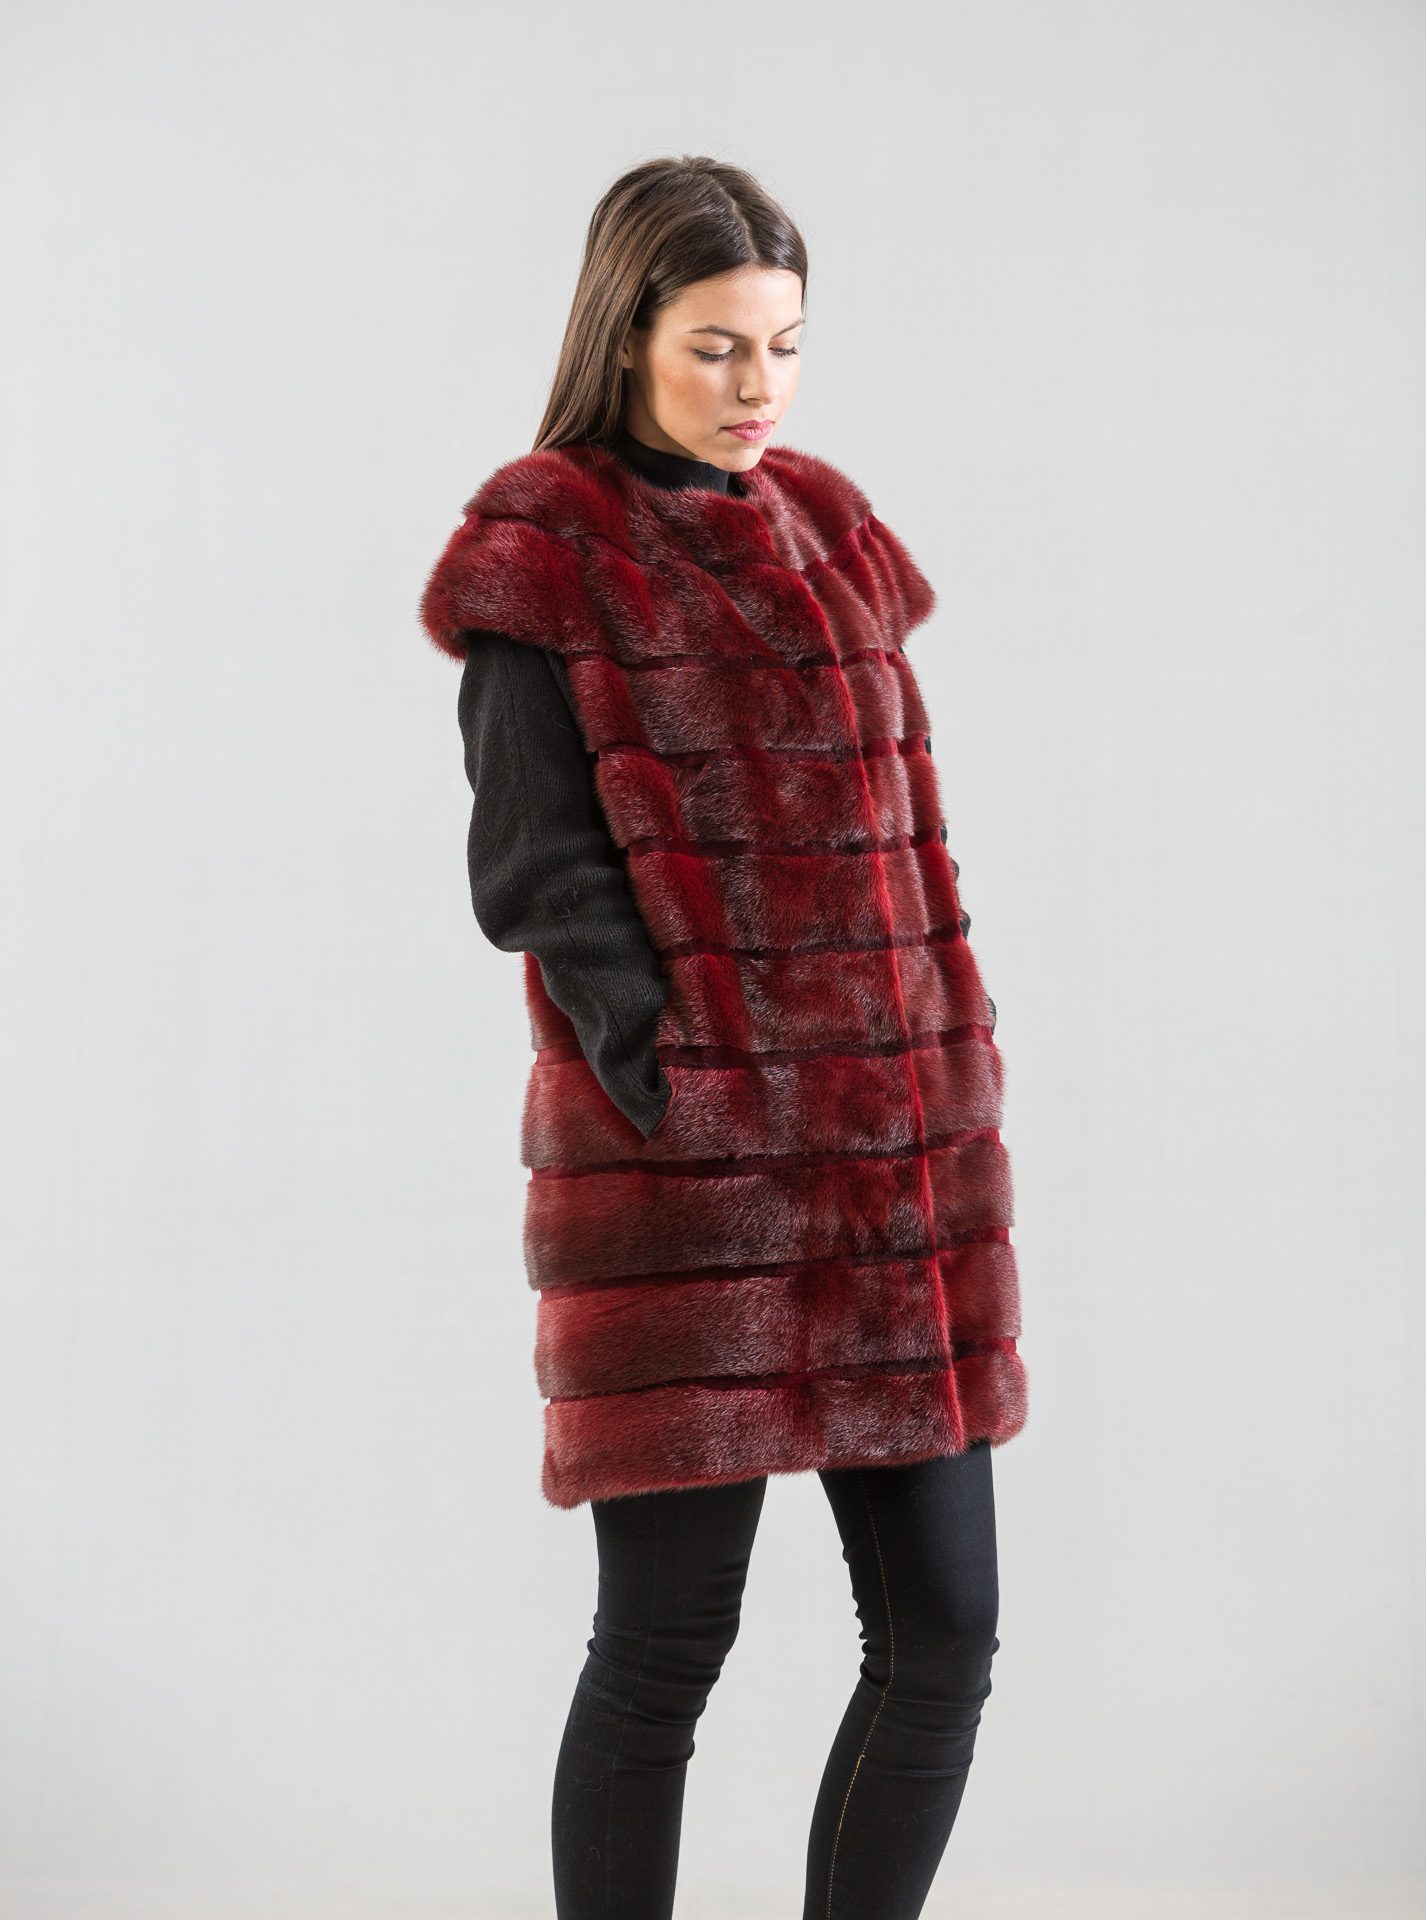 Dark Red Mink Fur Vest. 100% Real Fur Coats and Accessories.